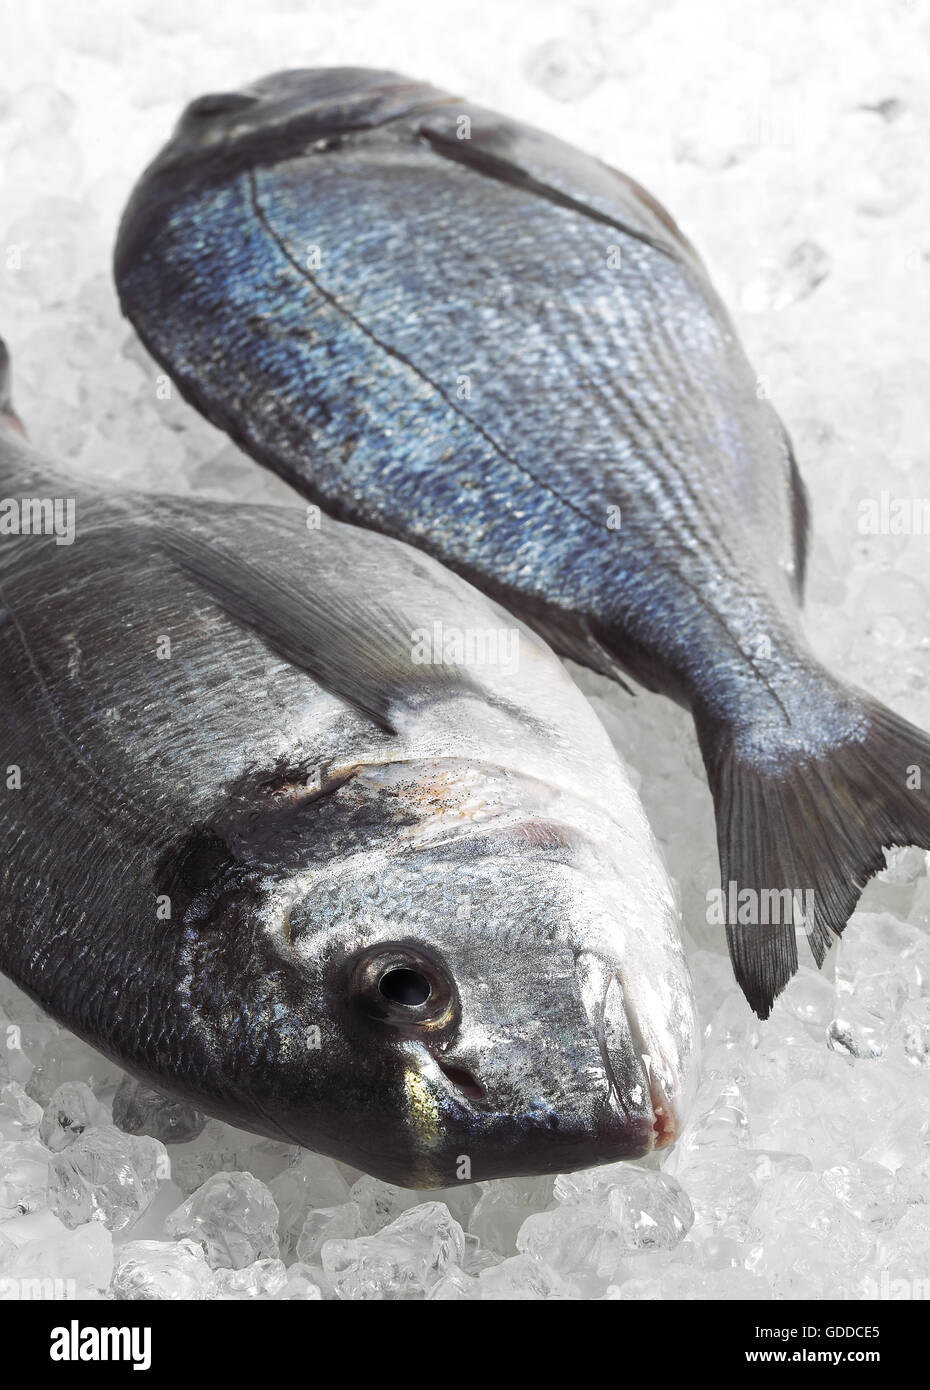 Gilthead Bream, sparus auratus, Fresh Fishes on Ice Stock Photo